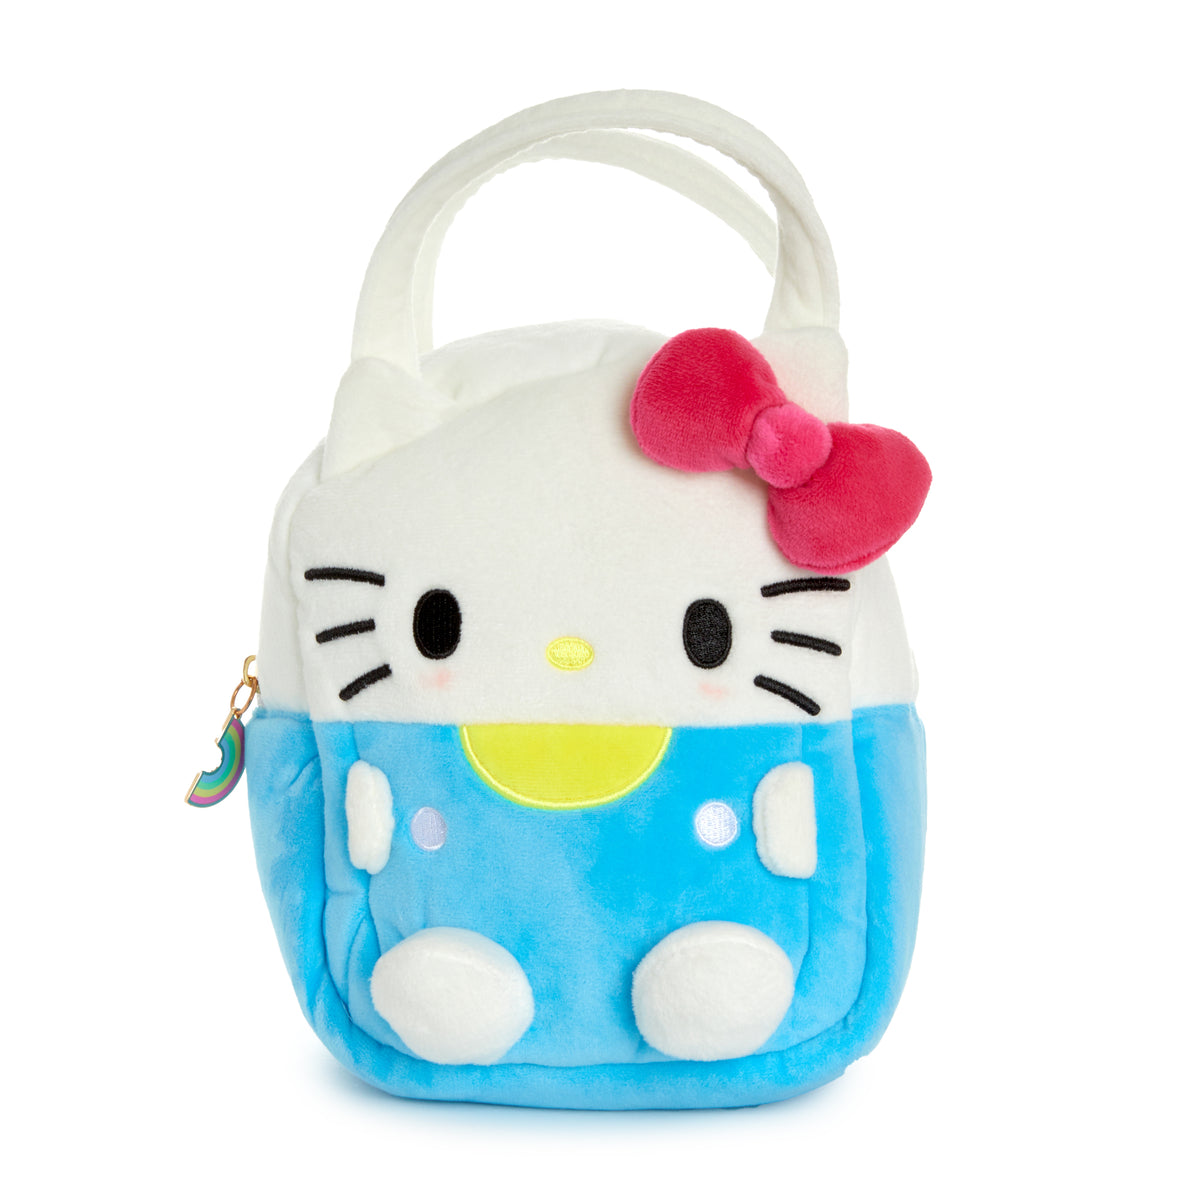 Balenciaga hits the nostalgia spot with this $2950 Hello Kitty bag |  Fashion Trends - Hindustan Times